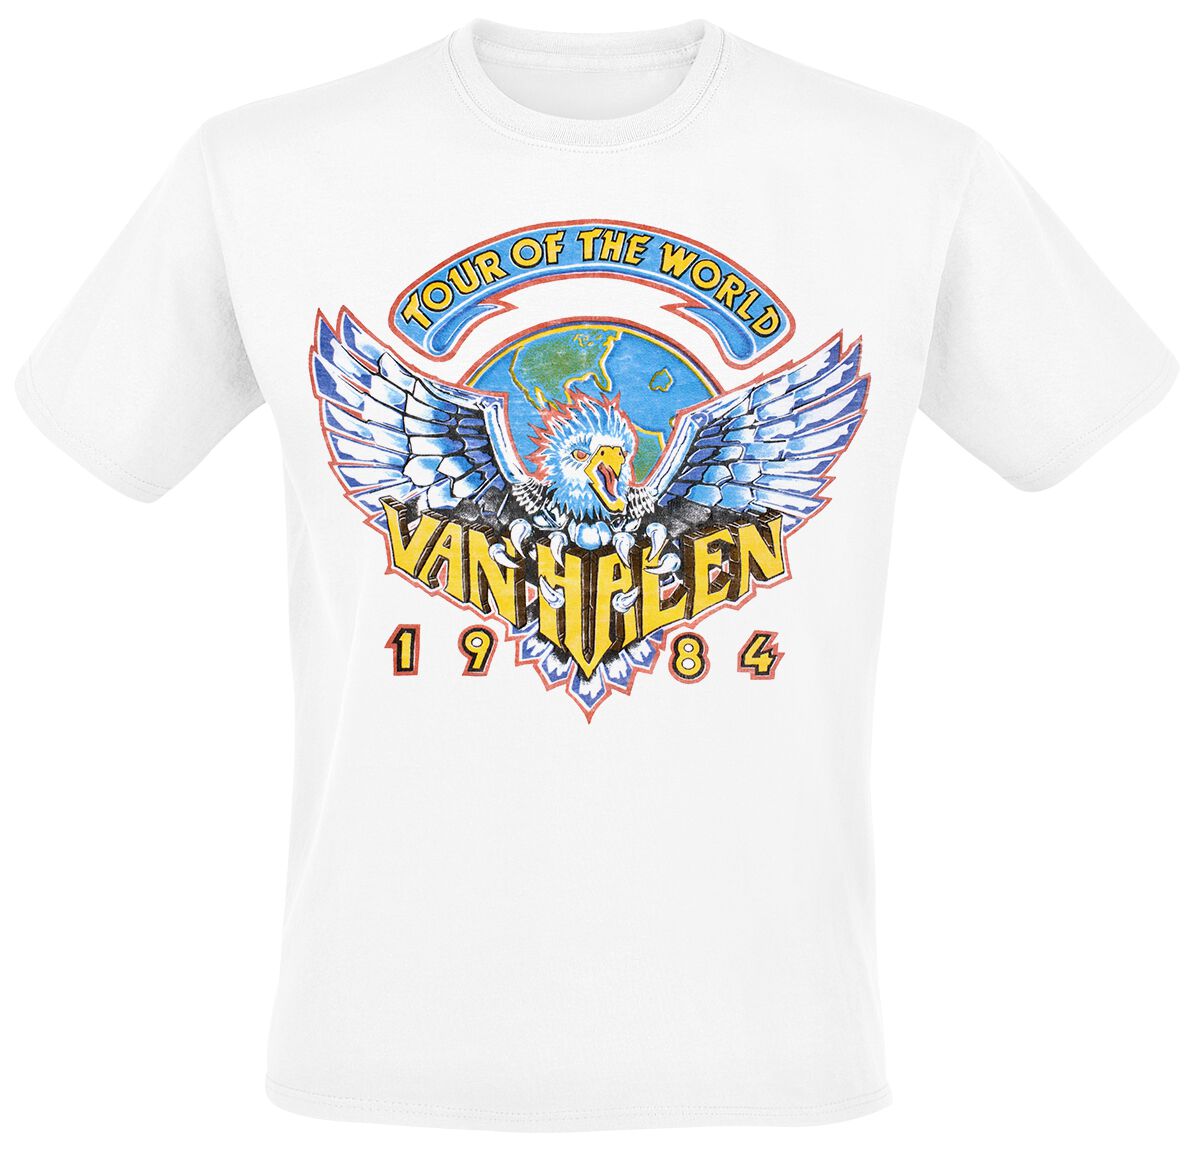 Van Halen Tour Of The World '84 T-Shirt white